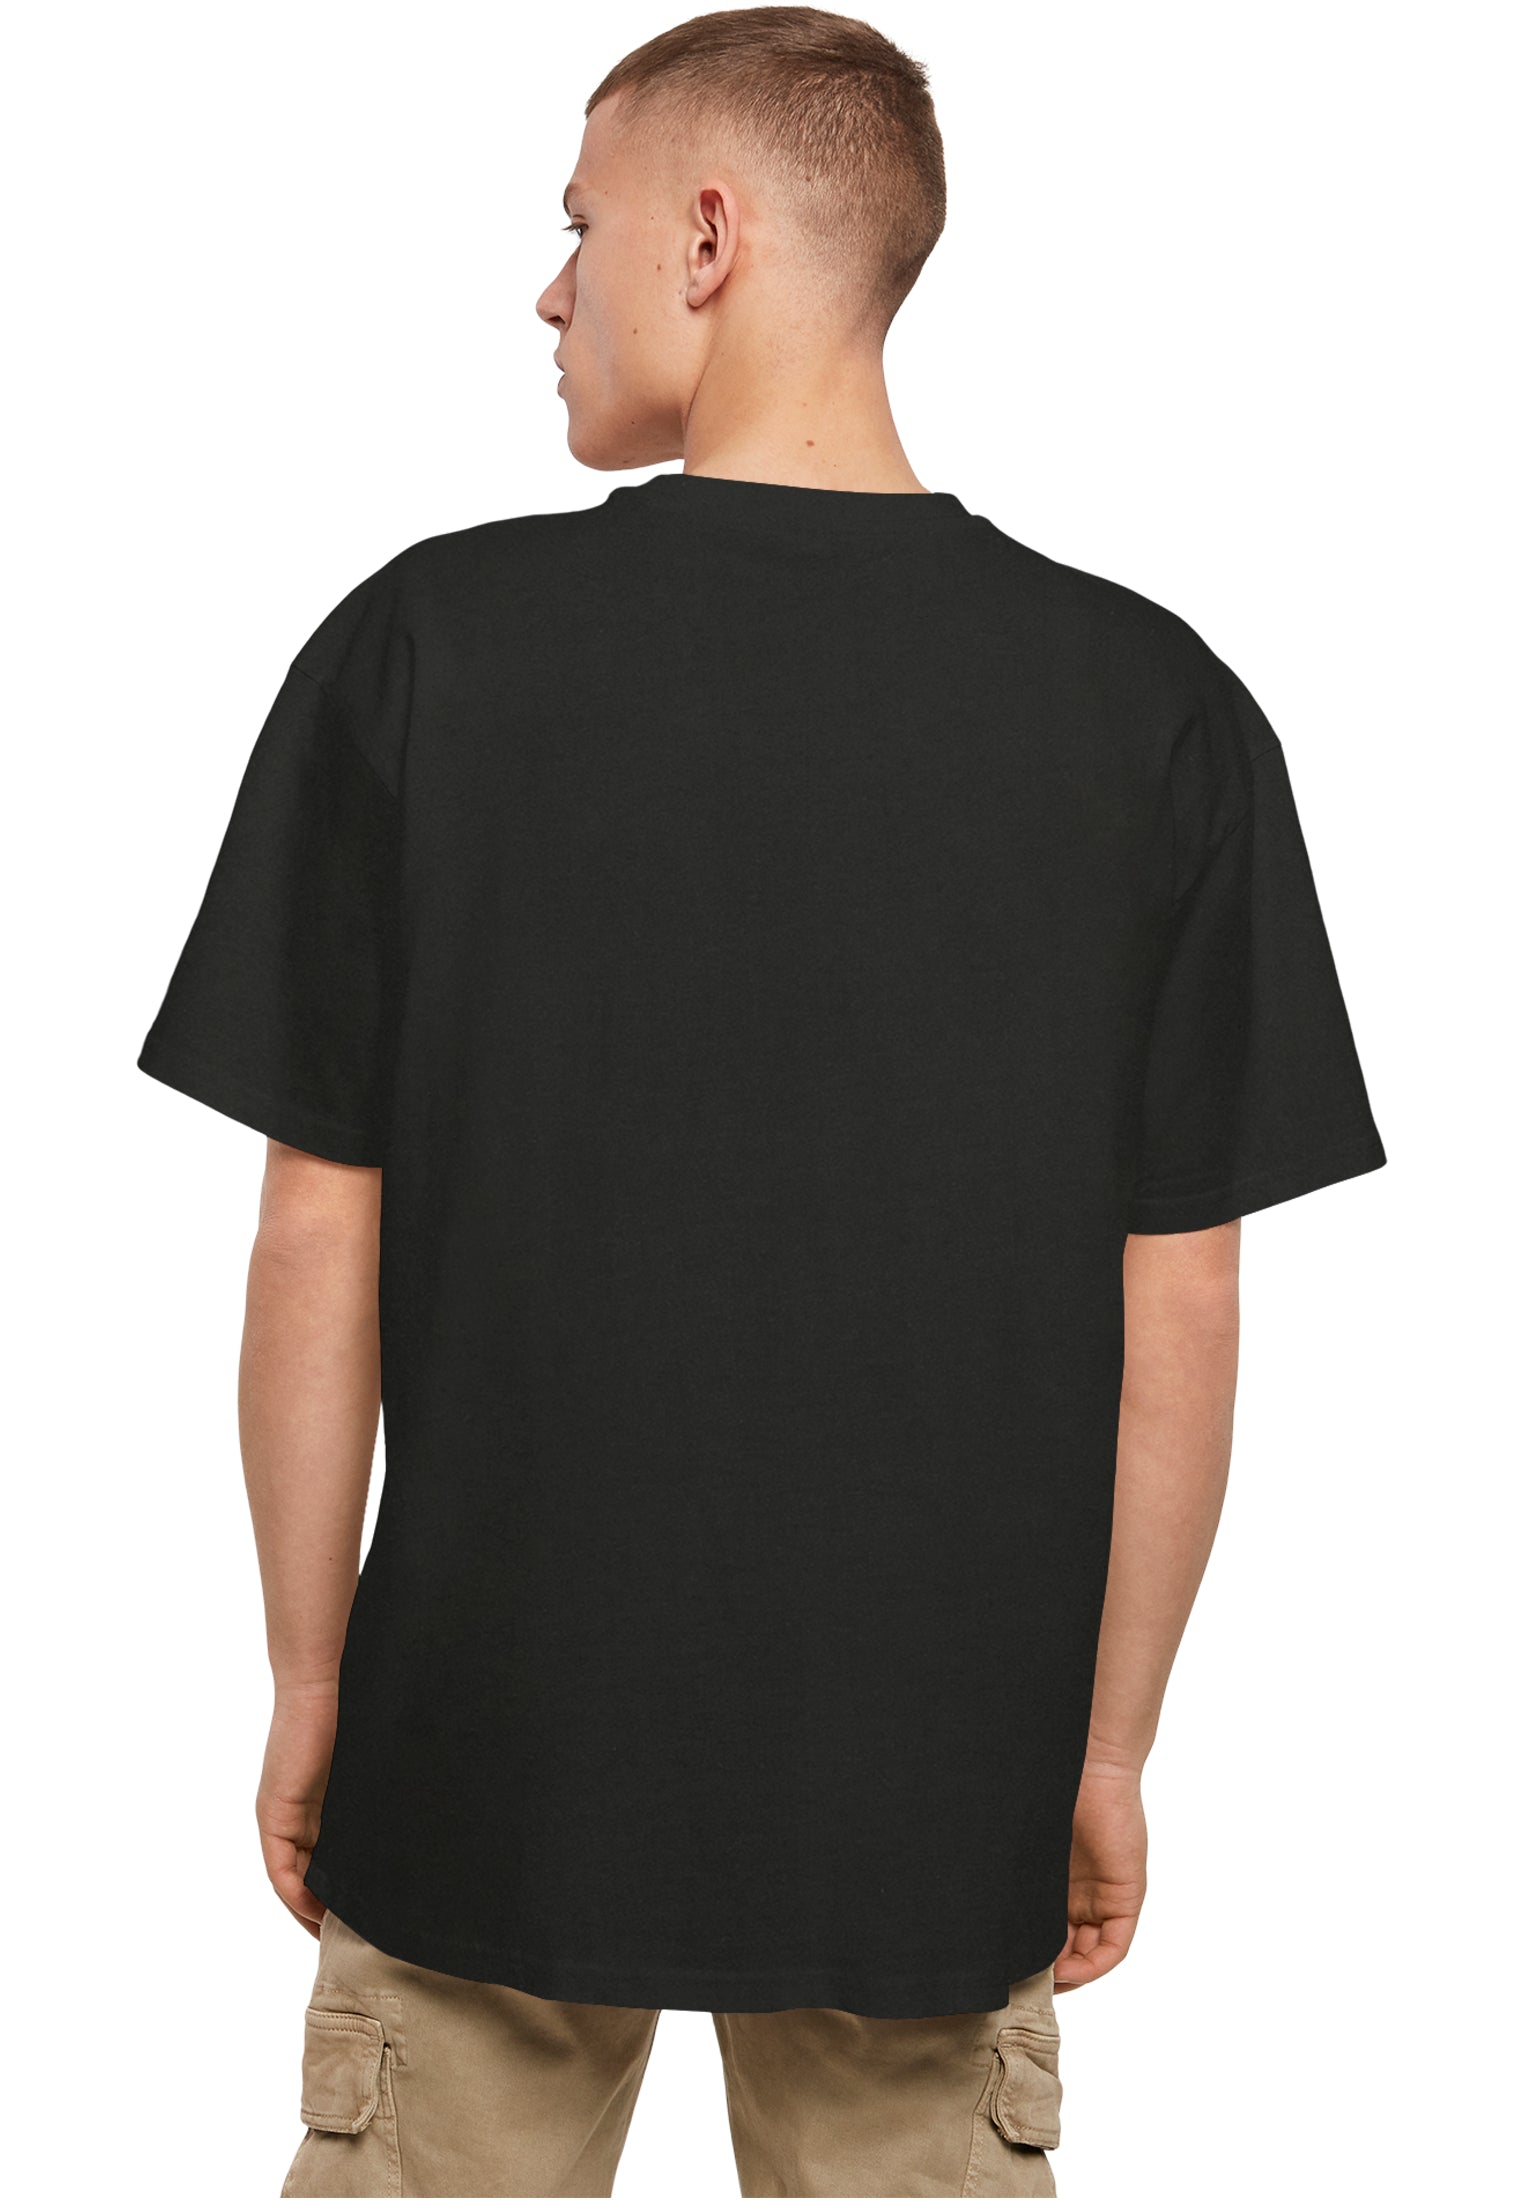 Upscale Studios Goodfellas Poster Oversize T-Shirt black im BAWRZ® One Stop Hip-Hop Shop